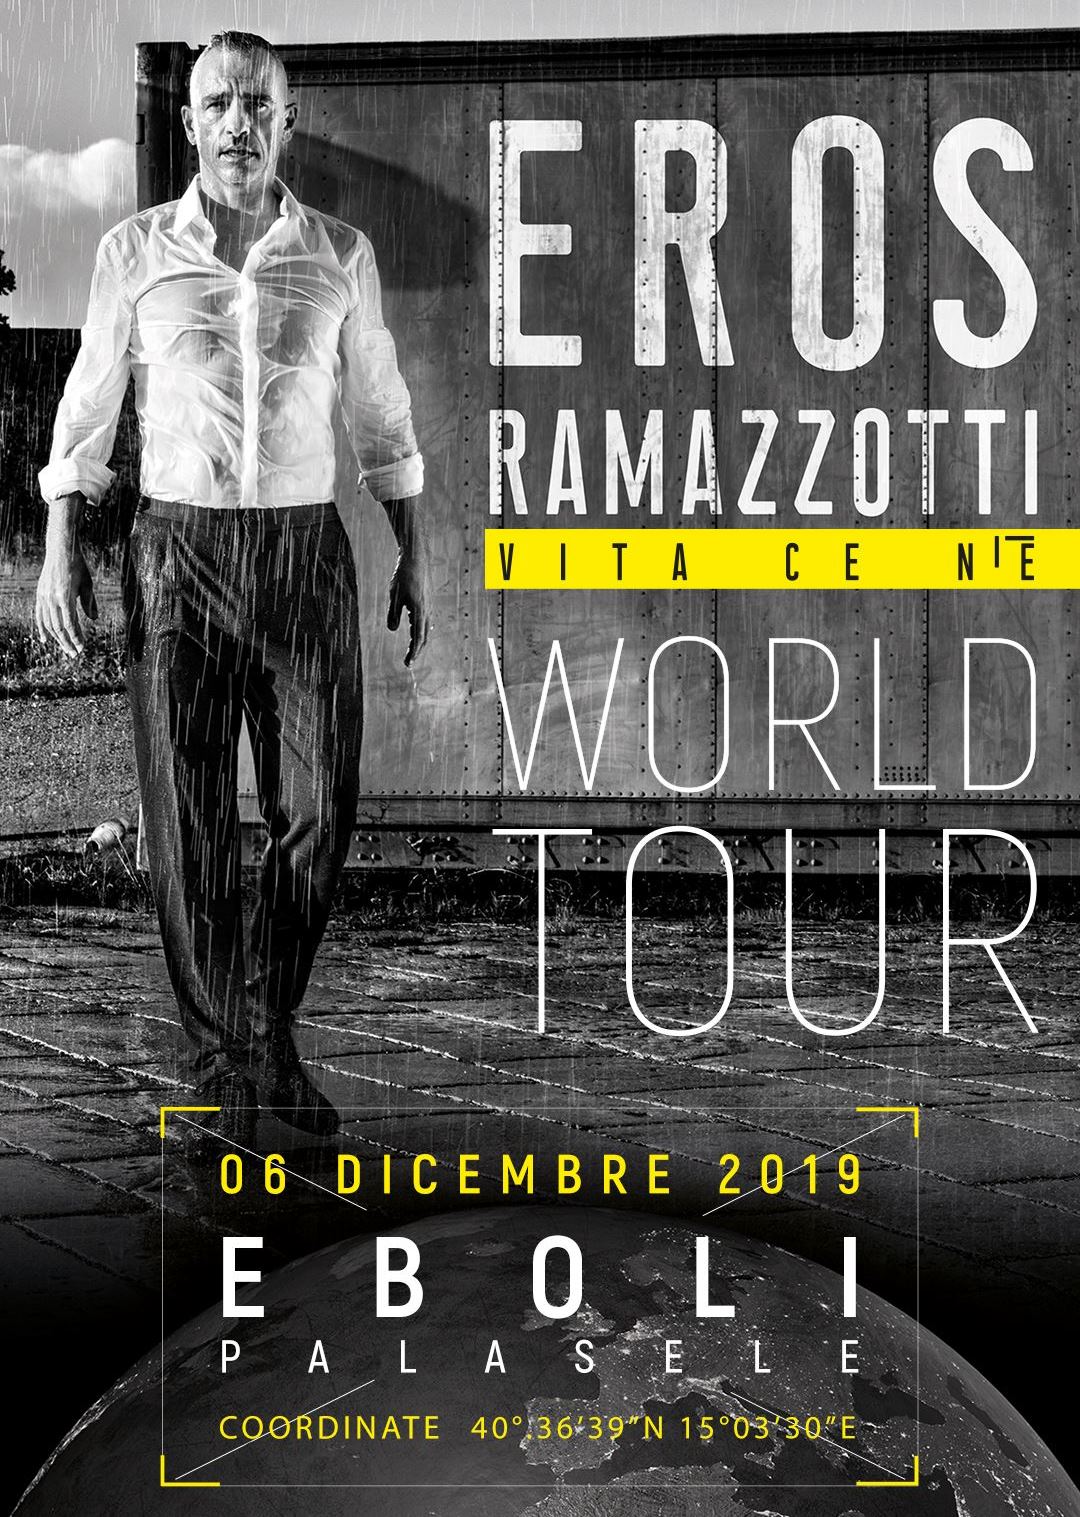 ‘Vita ce n’è world tour’ al PalaSele di Eboli: venerdì 6 dicembre arriva Eros Ramazzotti